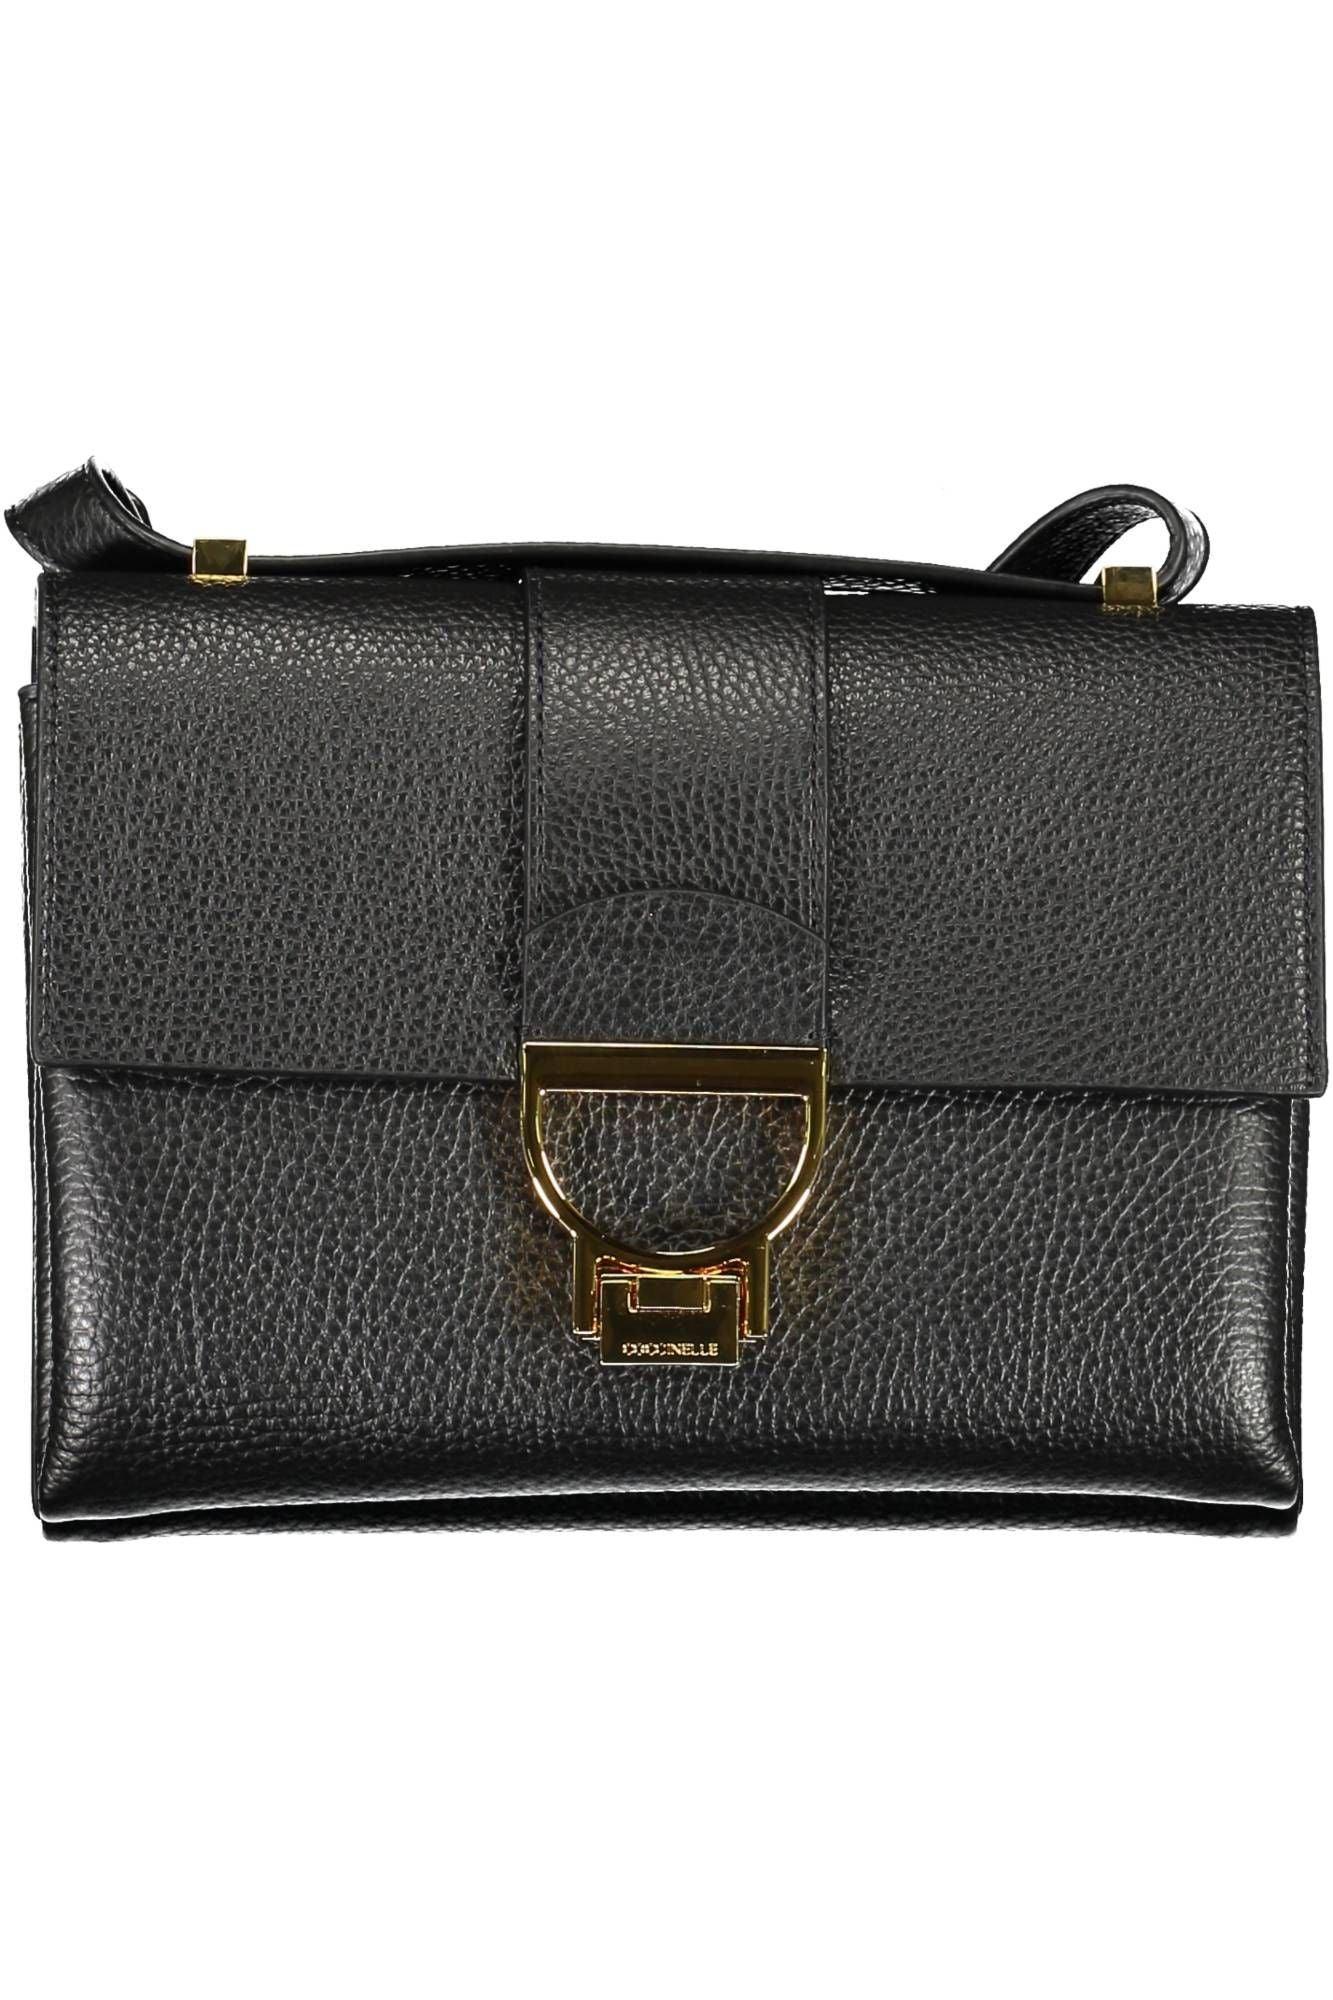 Coccinelle Chic Black Leather Shoulder Bag - PER.FASHION